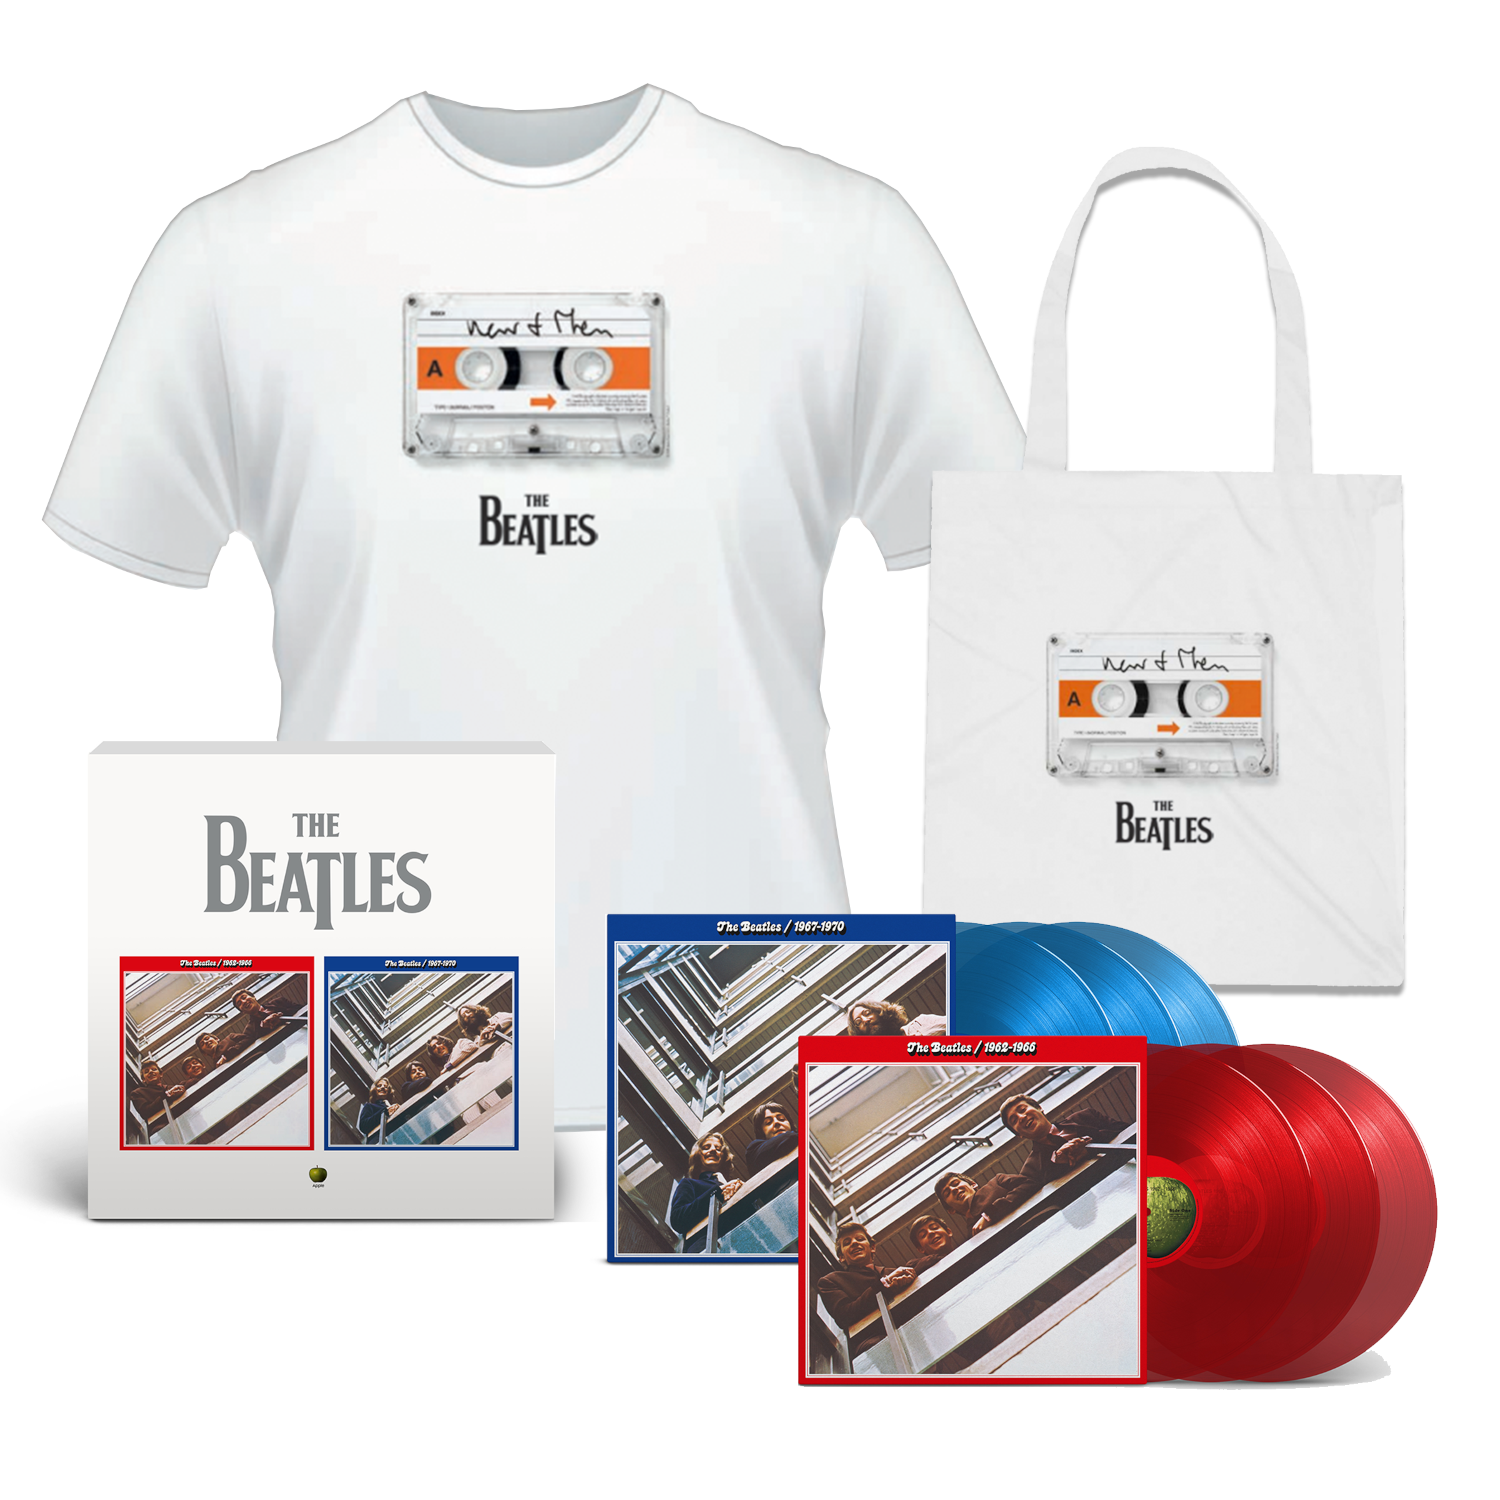 https://images.bravado.de/prod/product-assets/product-asset-data/beatles-the/the-beatles-domestic/products/505679/web/413376/image-thumb__413376__3000x3000_original/The-Beatles-The-Beatles-1962-1966-2023-Edition-The-Beatles-1967-1970-2023-Edition-Vinyl-Bundle-zu-bundeln-505679-413376.png